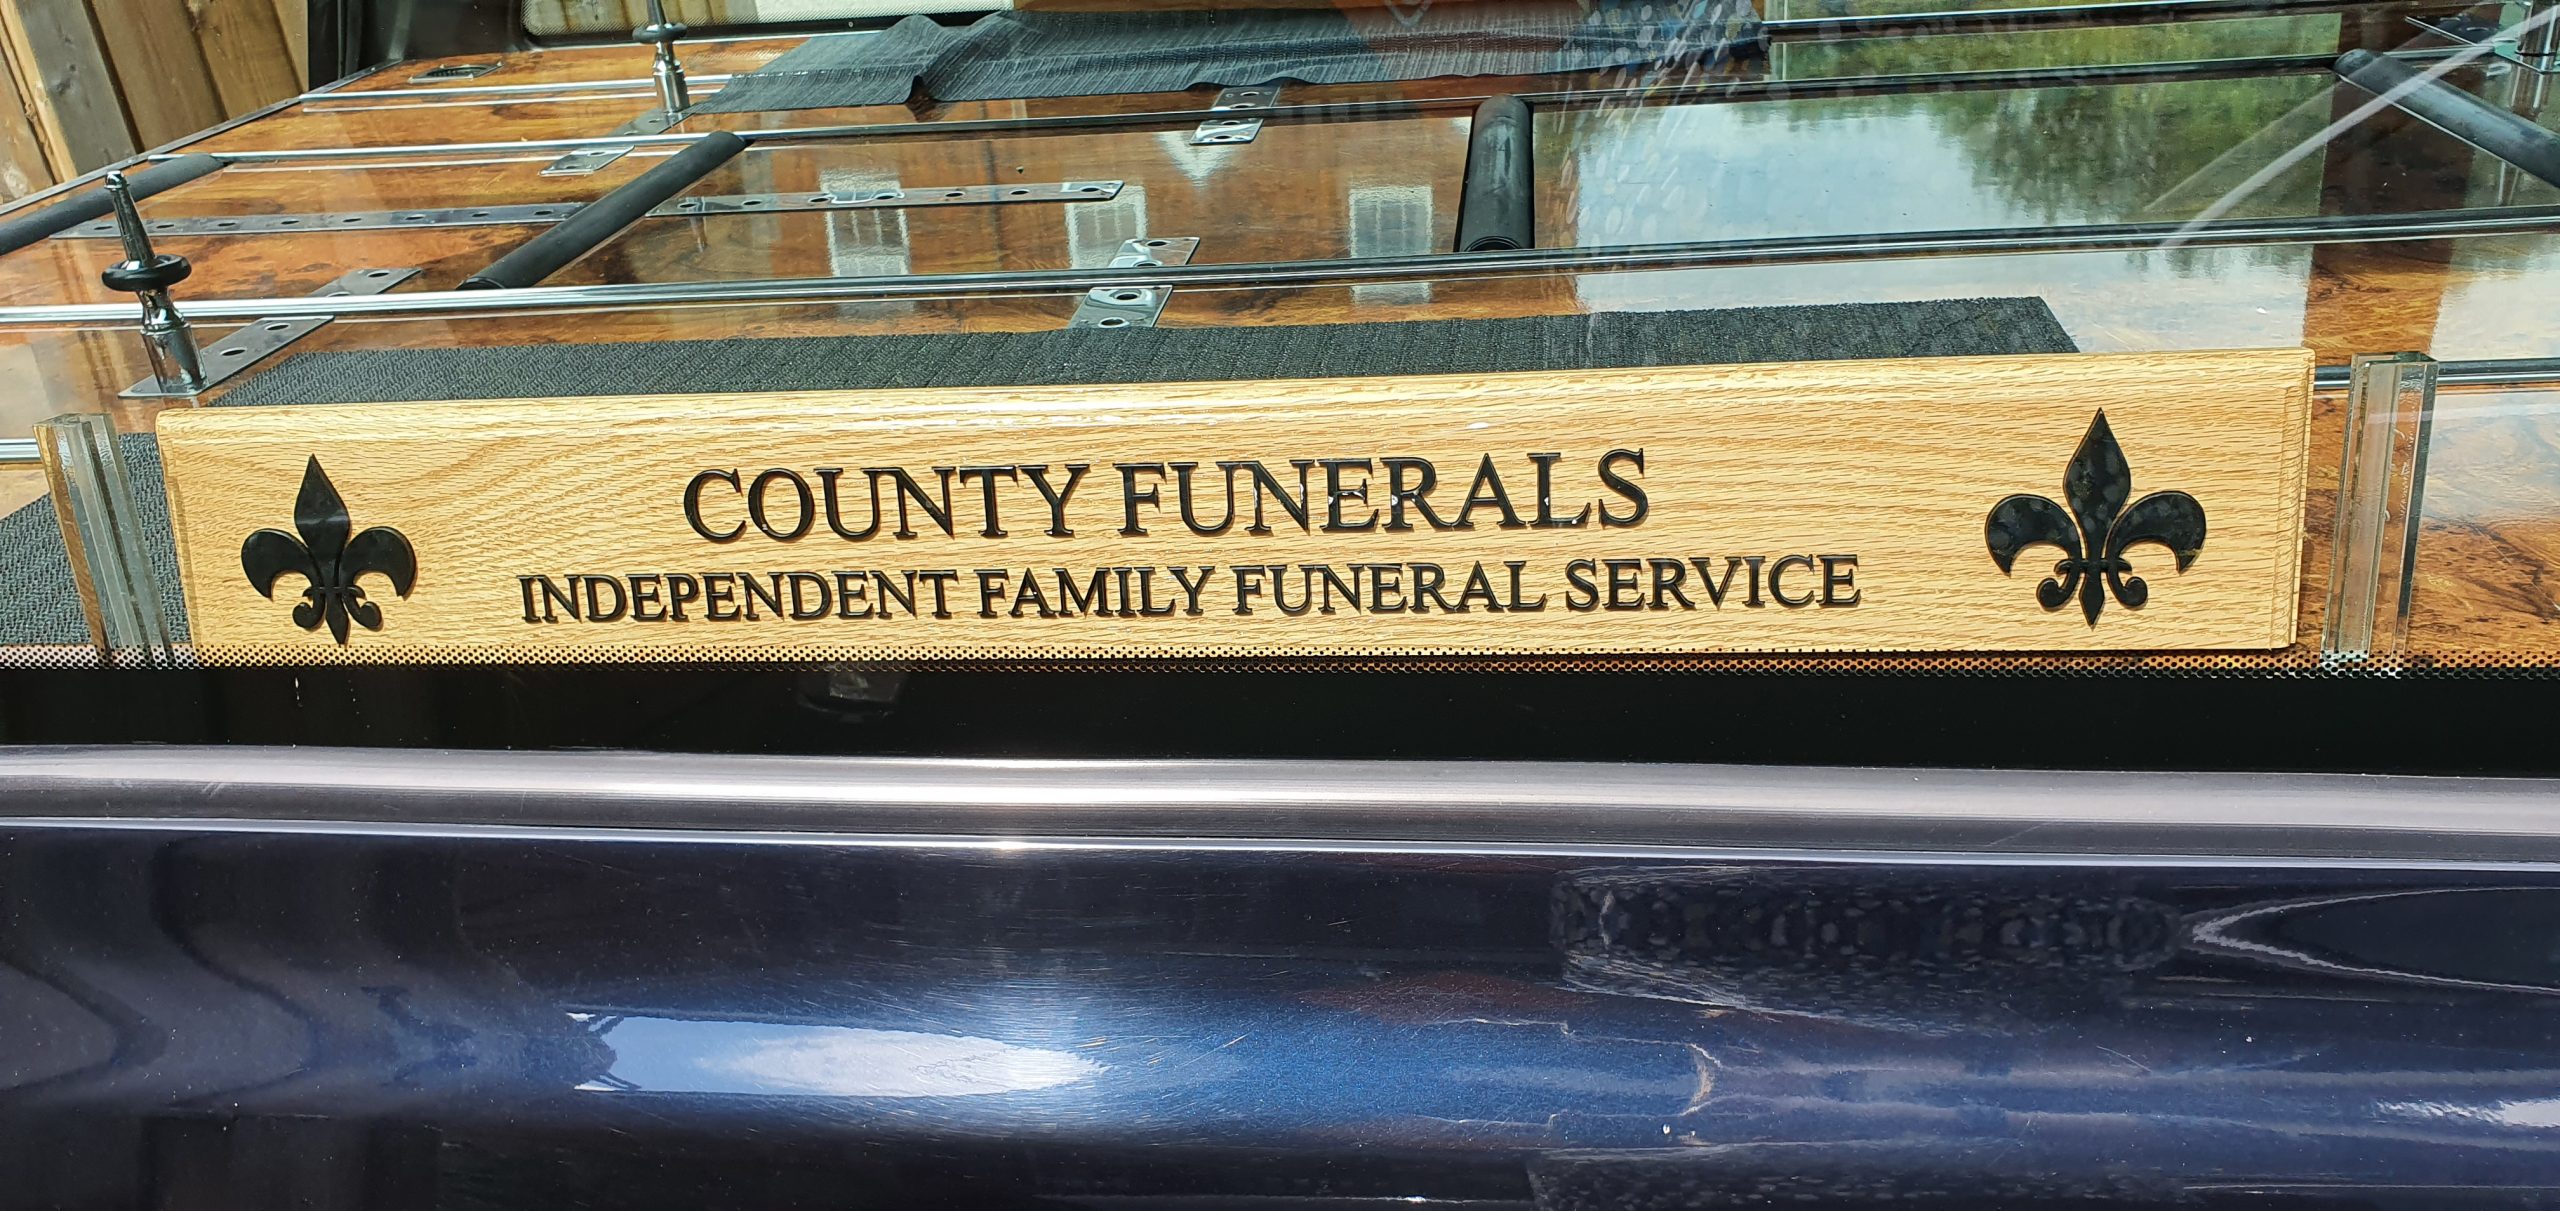 County Funerals Death Team Training